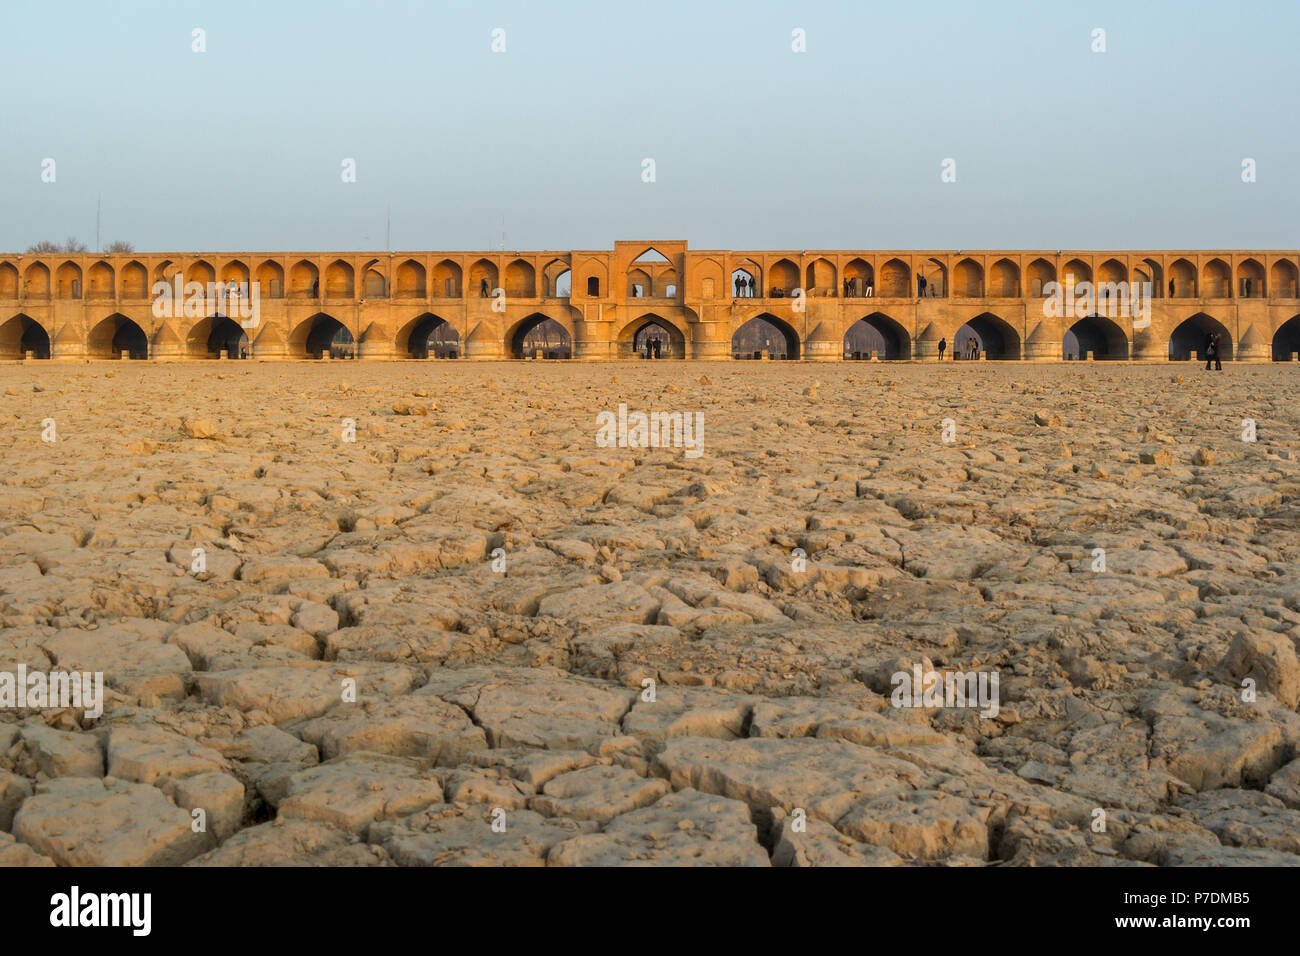 The stunning Khajou Khaju Bridge in Isfahan, Iran crossing the dried river bed of the Zayandeh River. Stock Photo